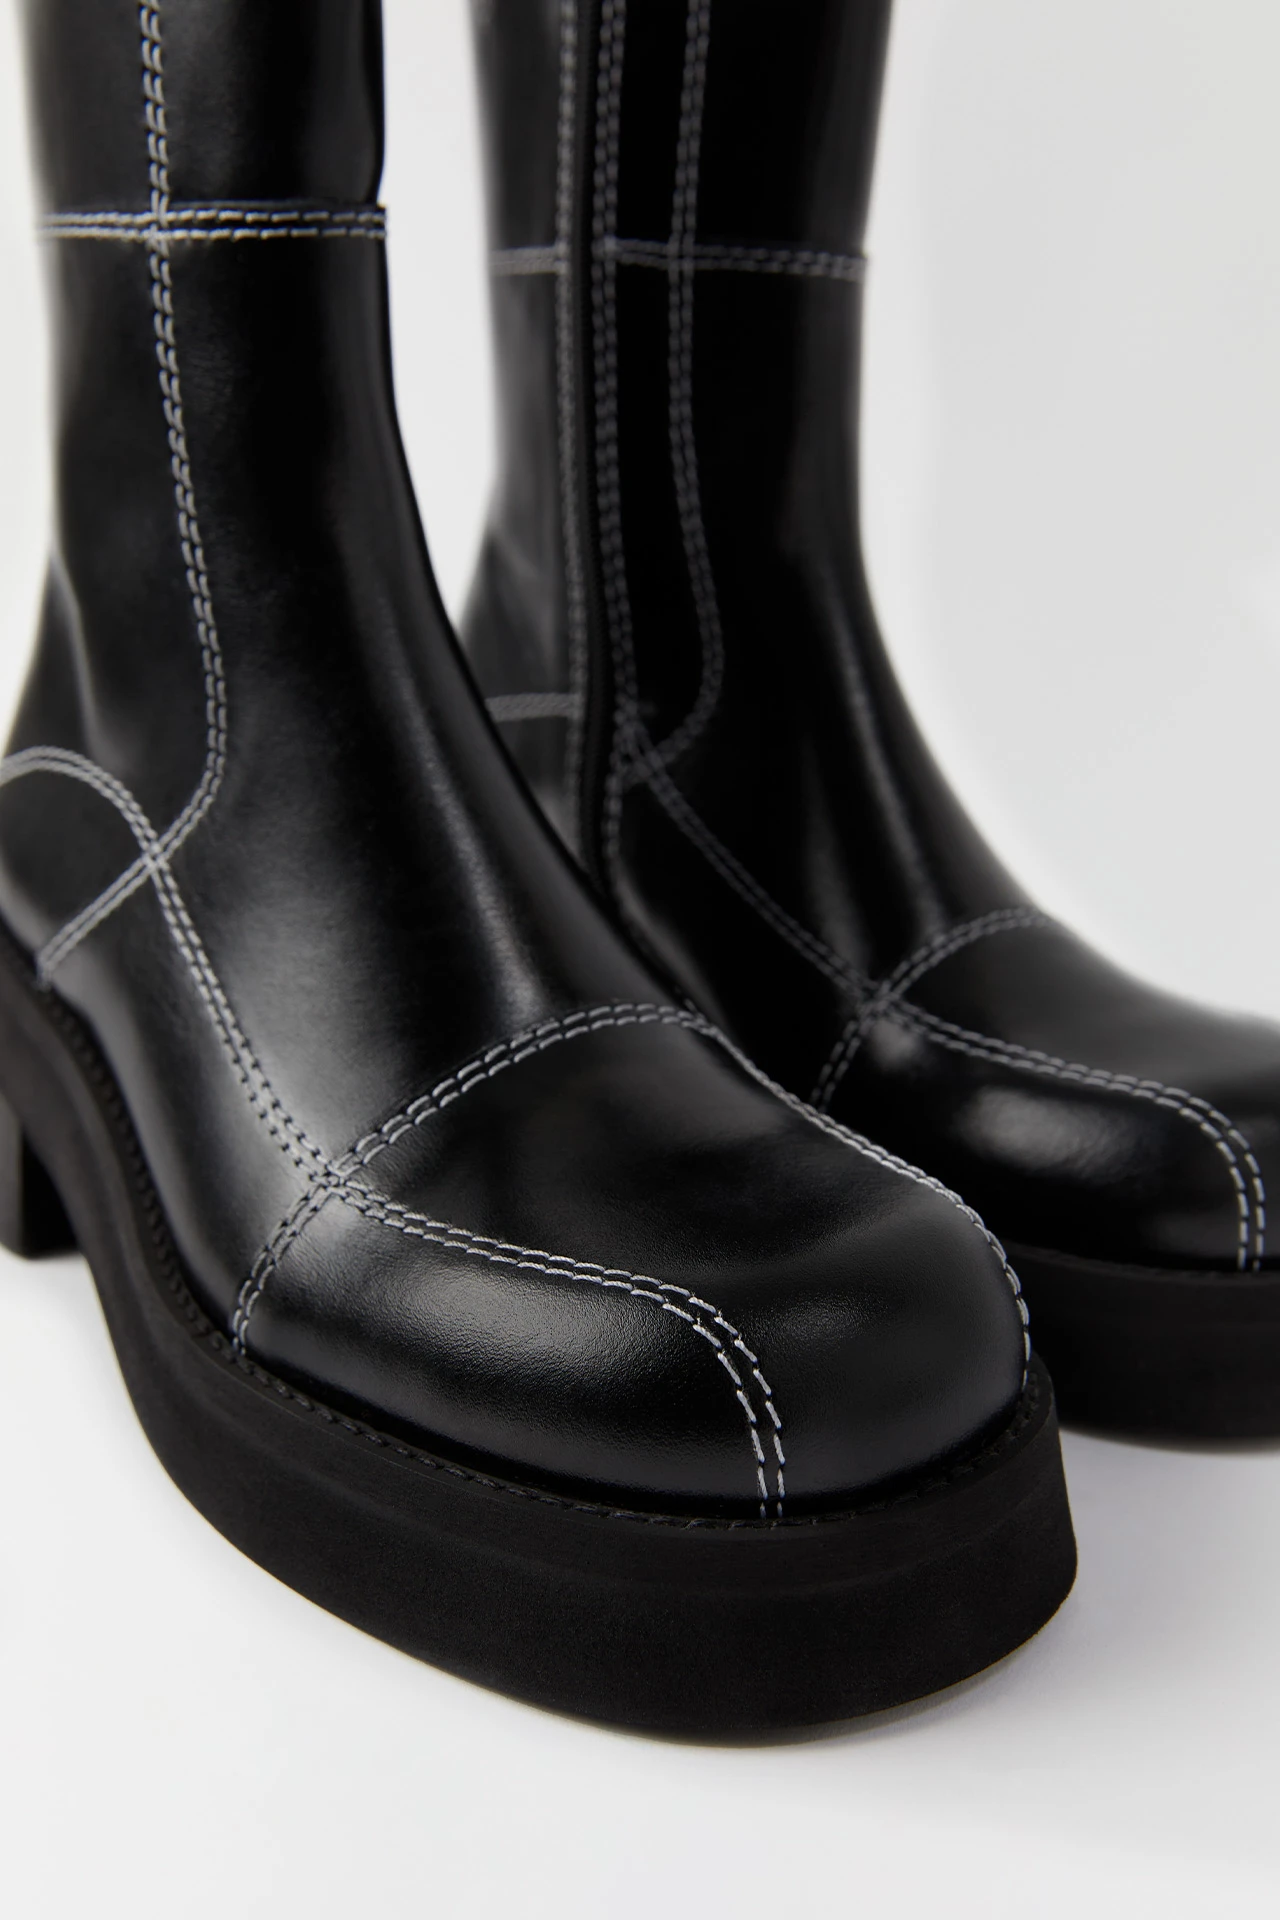 e8-heya-black-boots-002